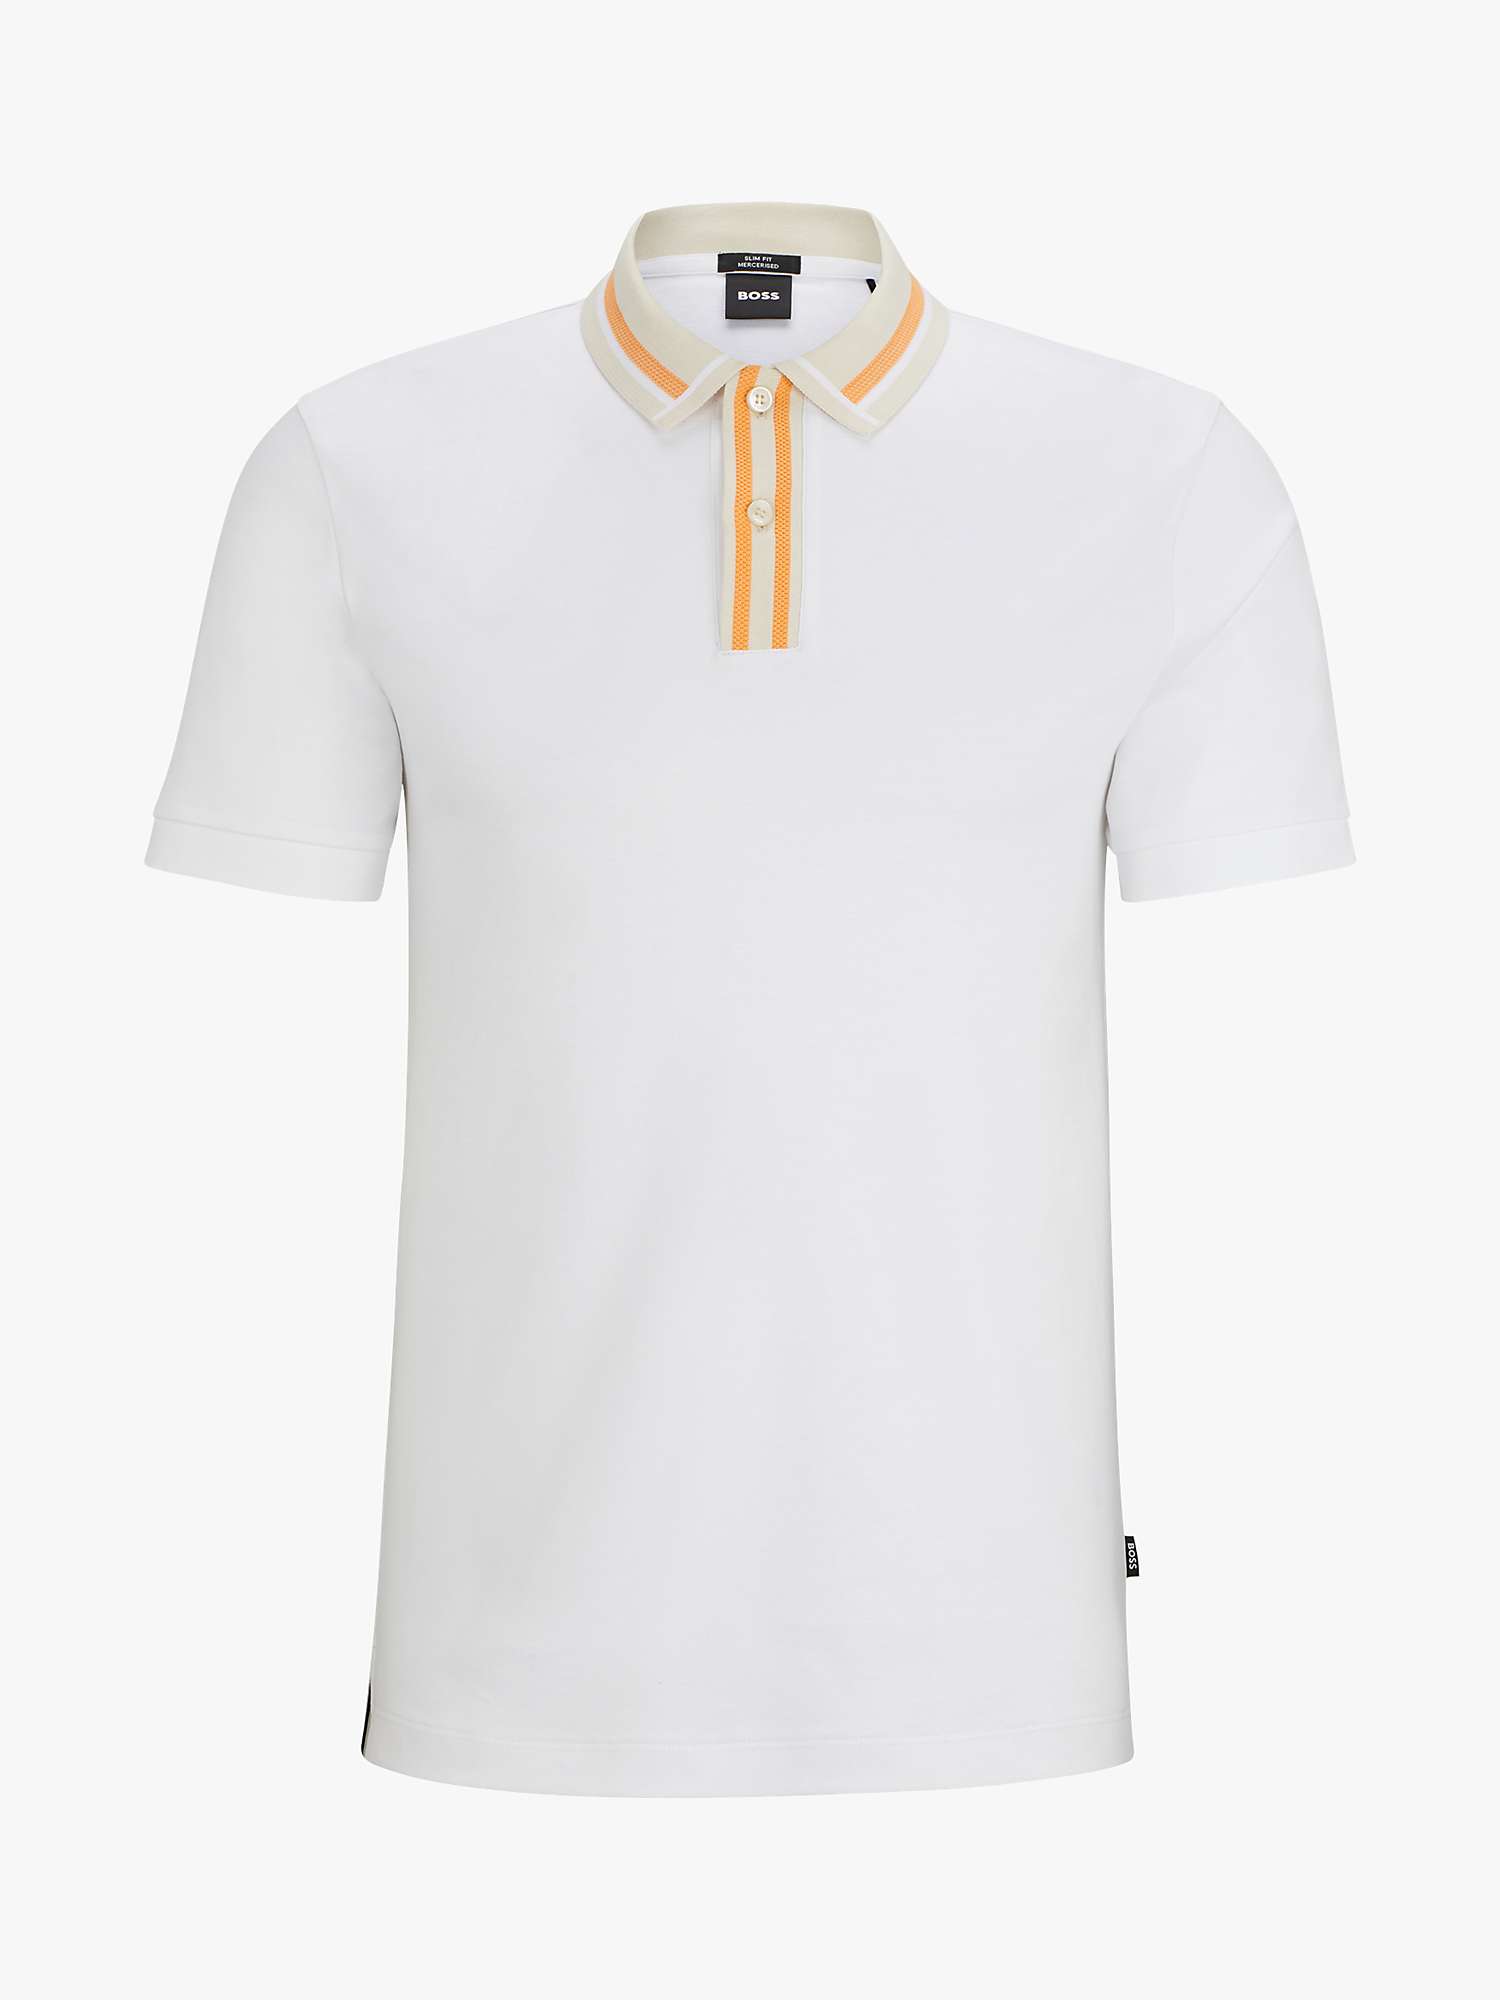 Buy BOSS Phillipson 36 Slim Fit Polo Shirt, White/Orange Online at johnlewis.com